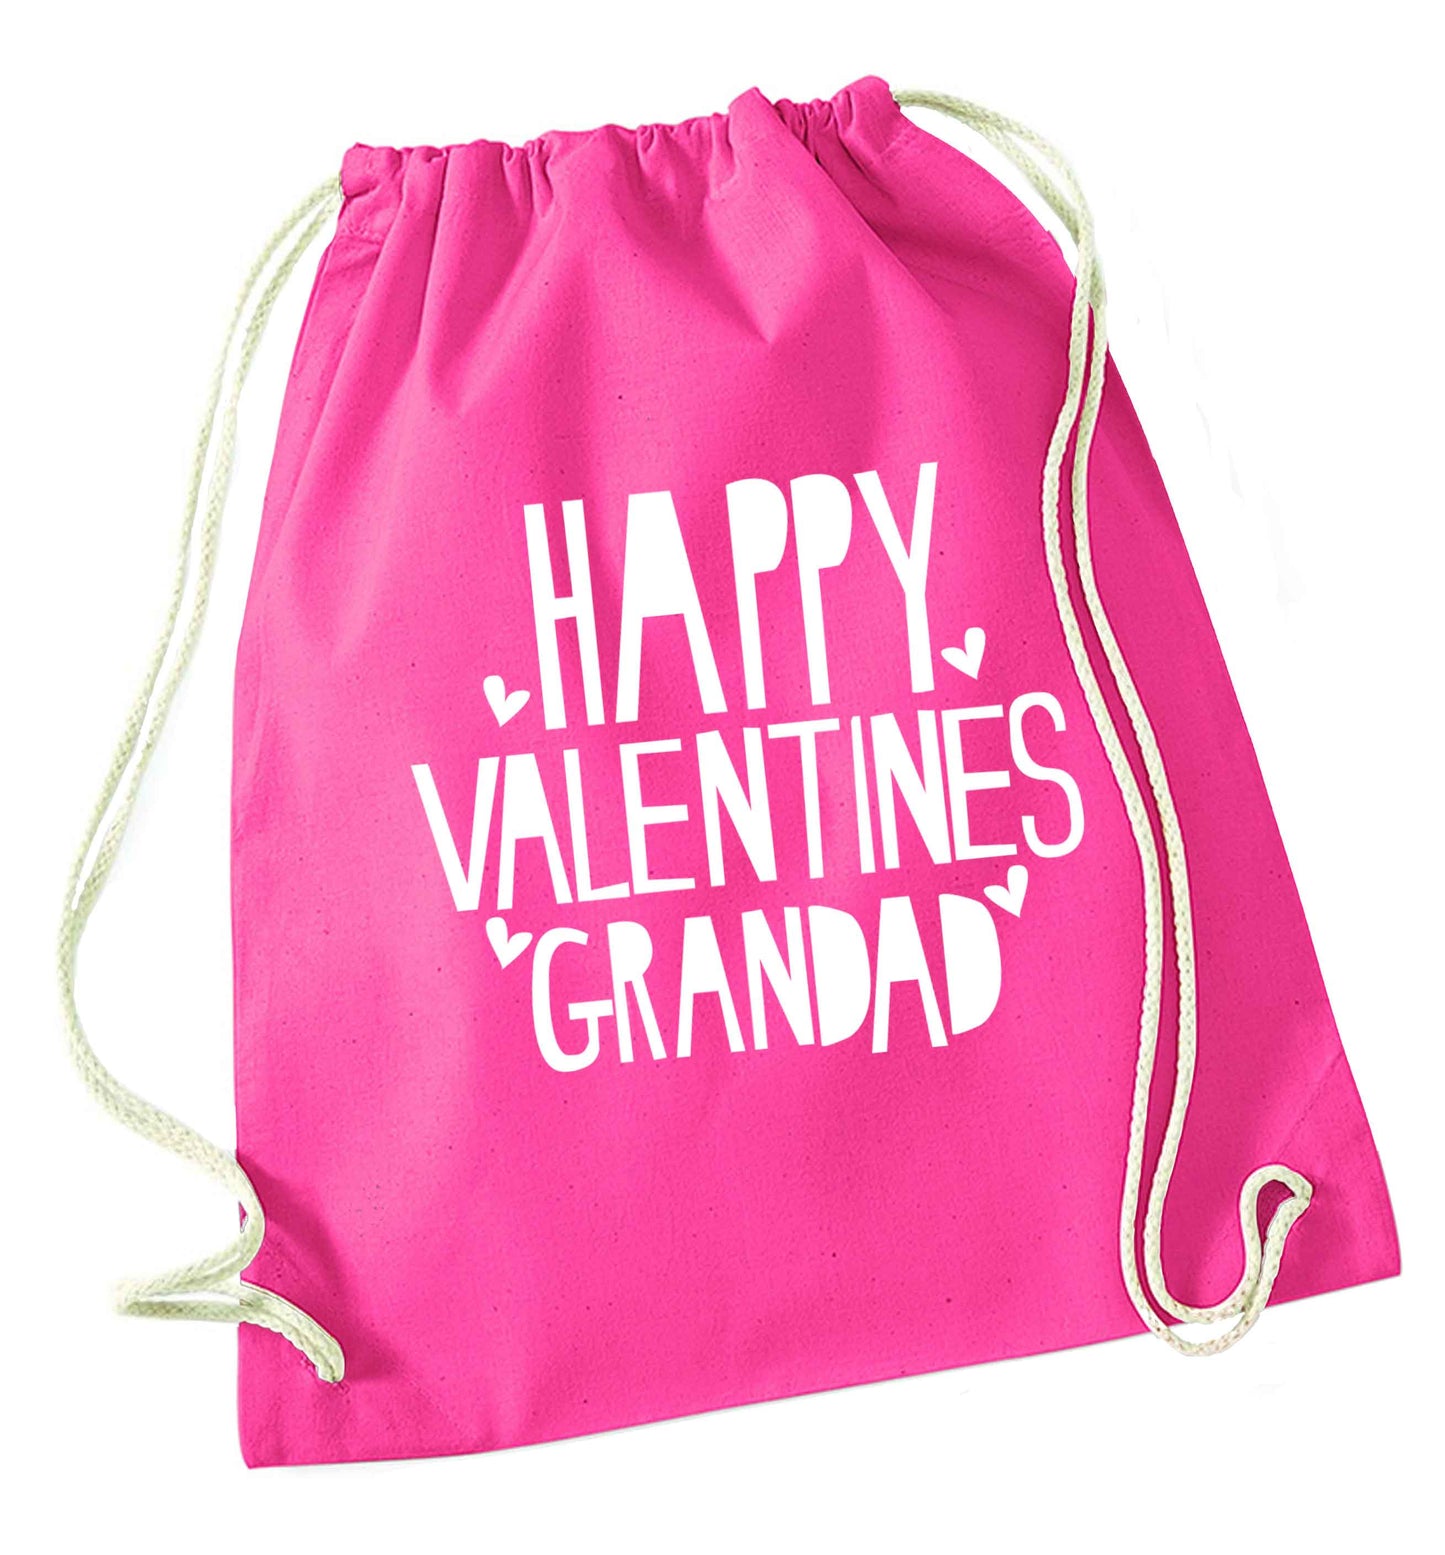 Happy valentines grandad pink drawstring bag